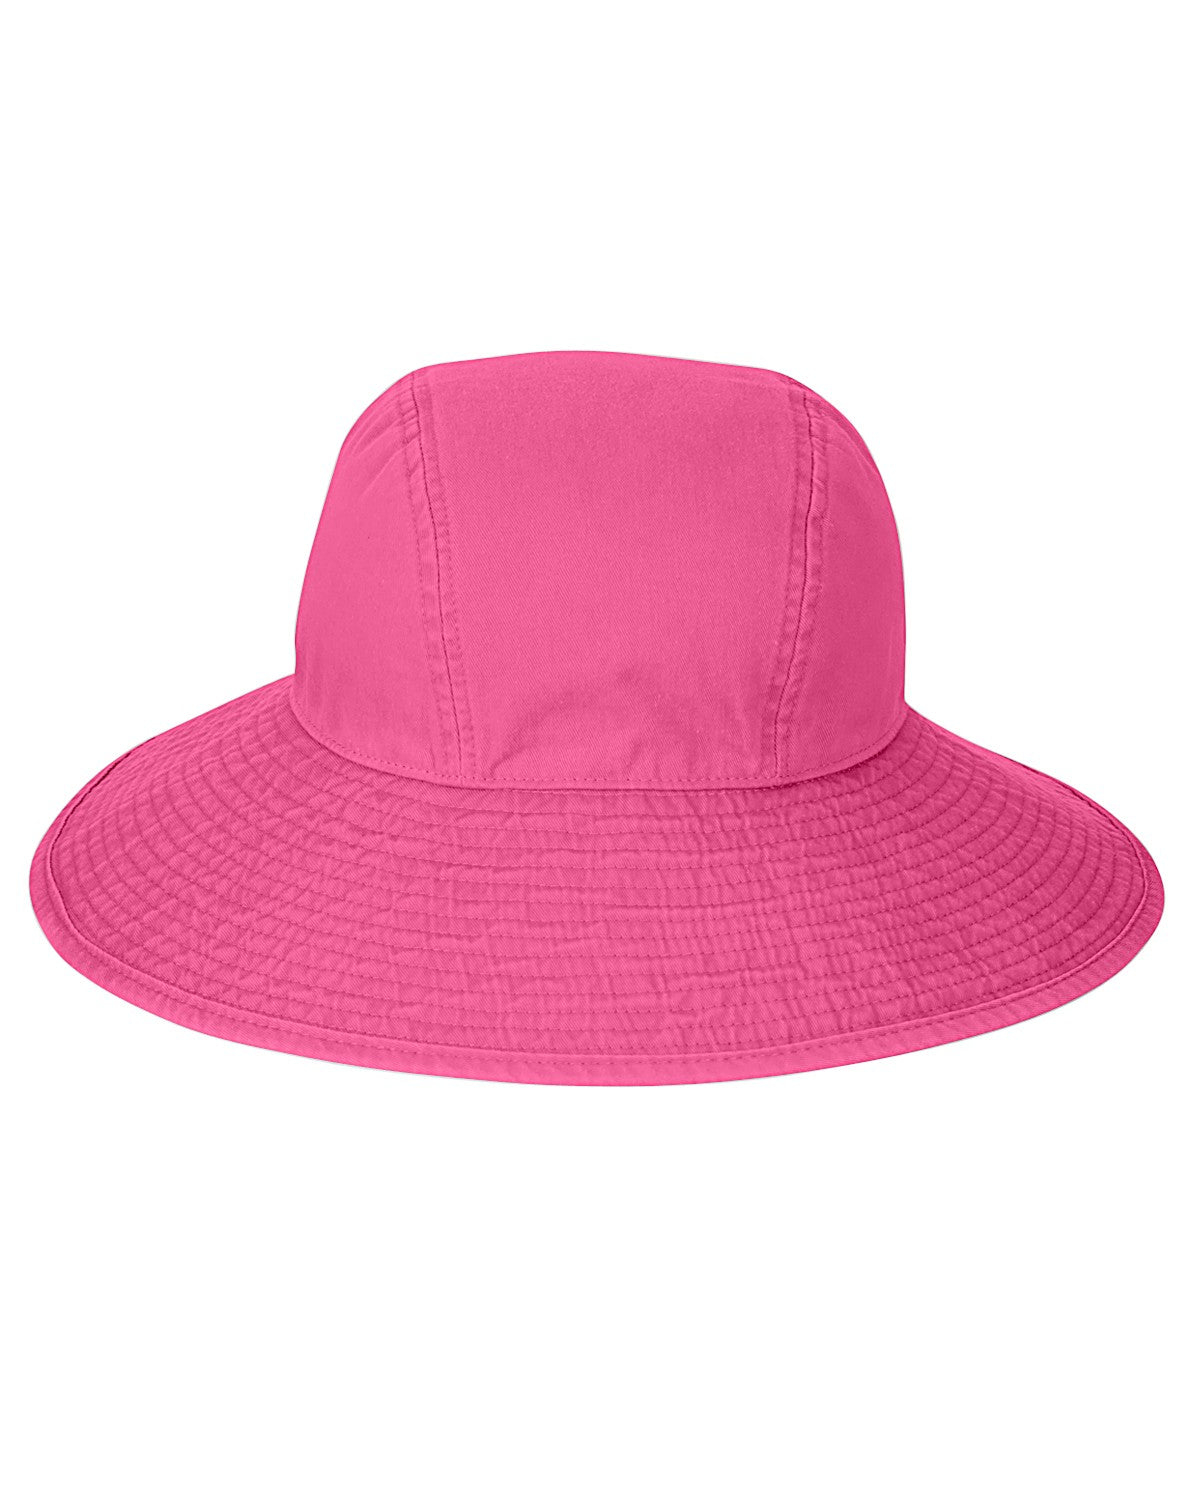 Ladies Bucket Hat (Hot Old Pink)